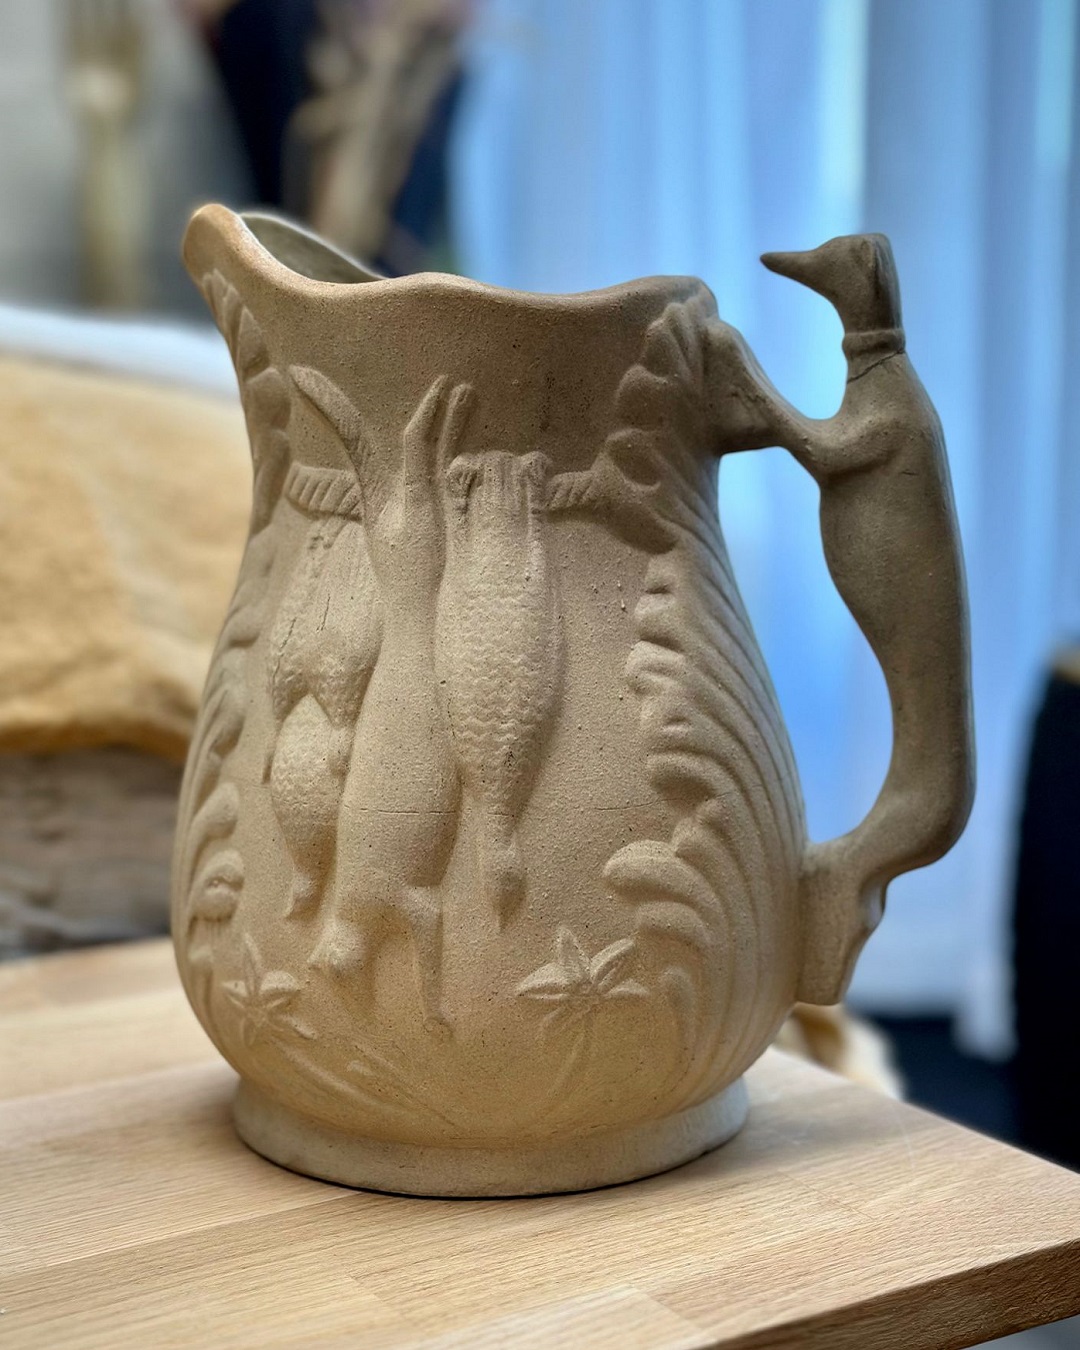 Pottery jug on table